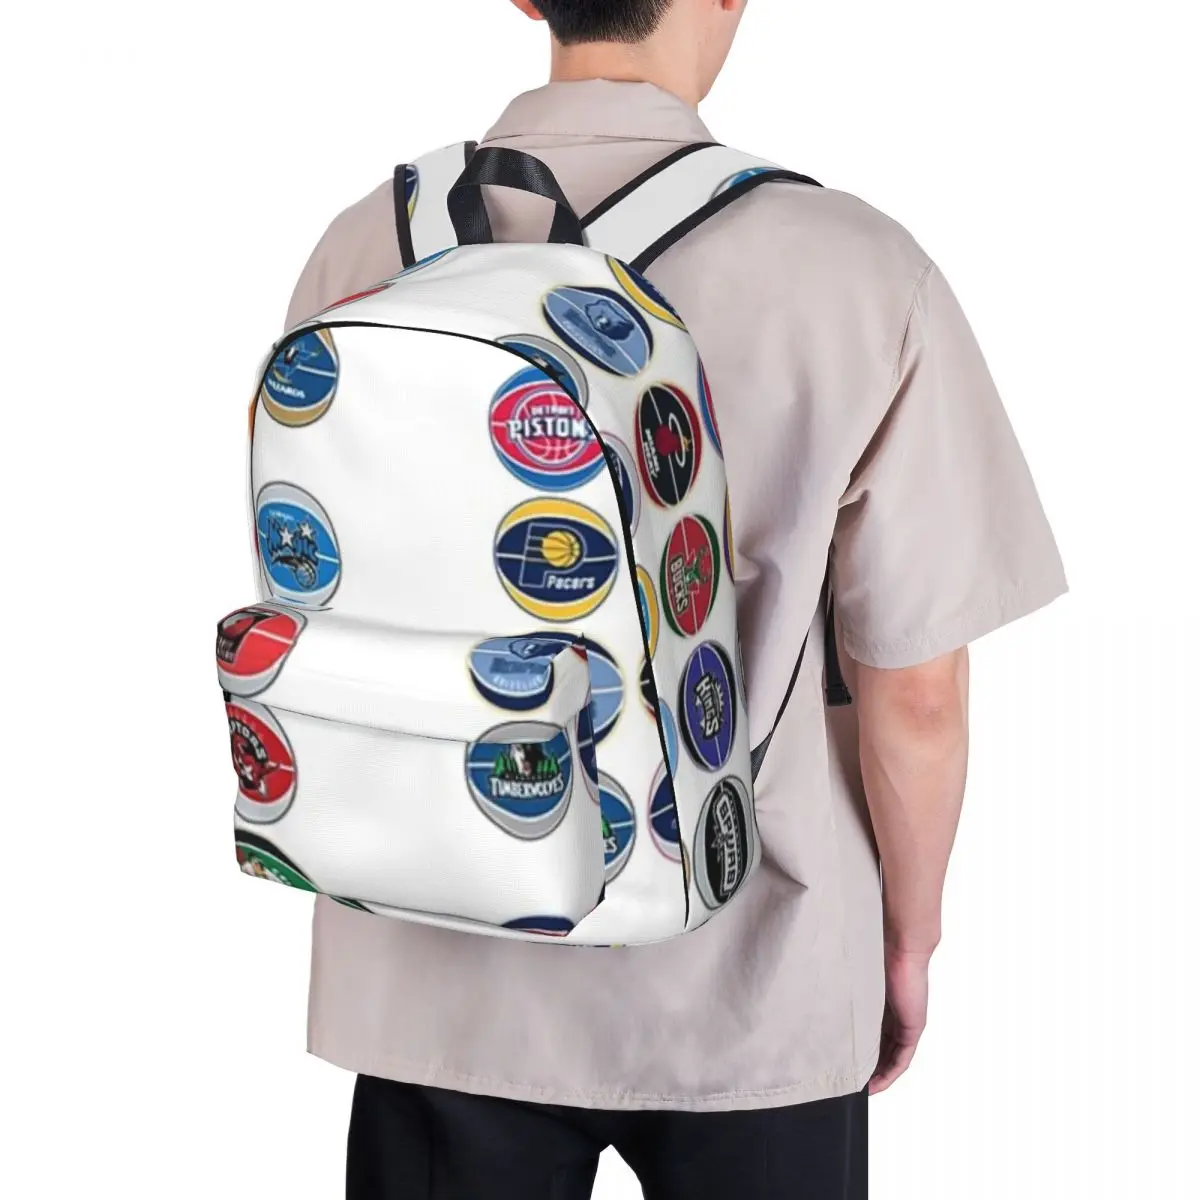 All Nba Teams Backpacks Boys Girls Bookbag Students School Bags